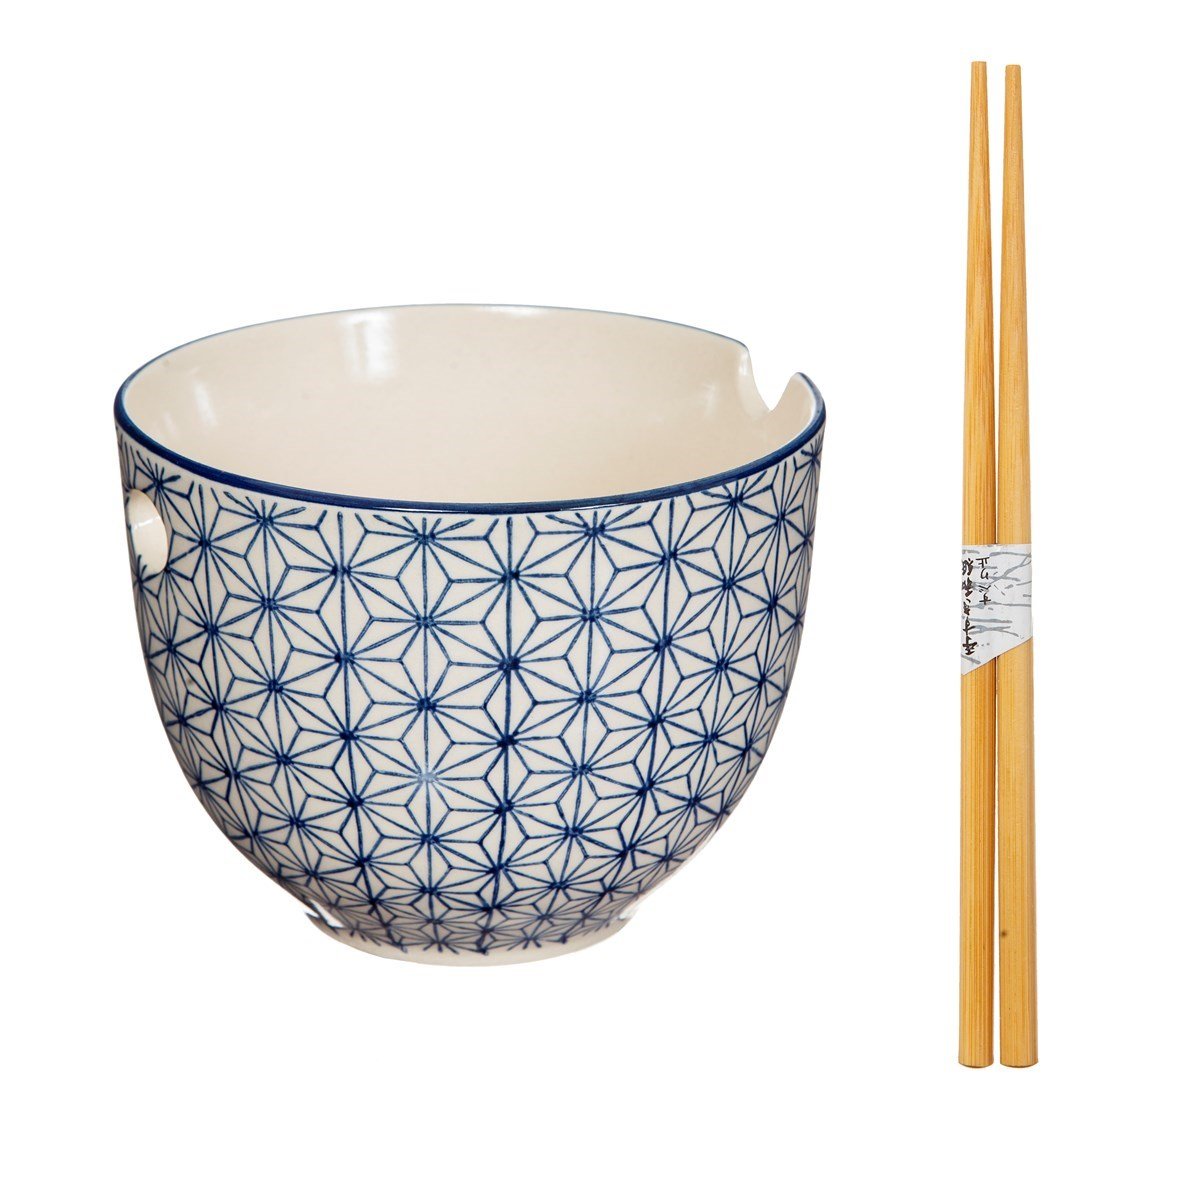 View Sashiko Pattern Noodle Bowl with Chopsticks information